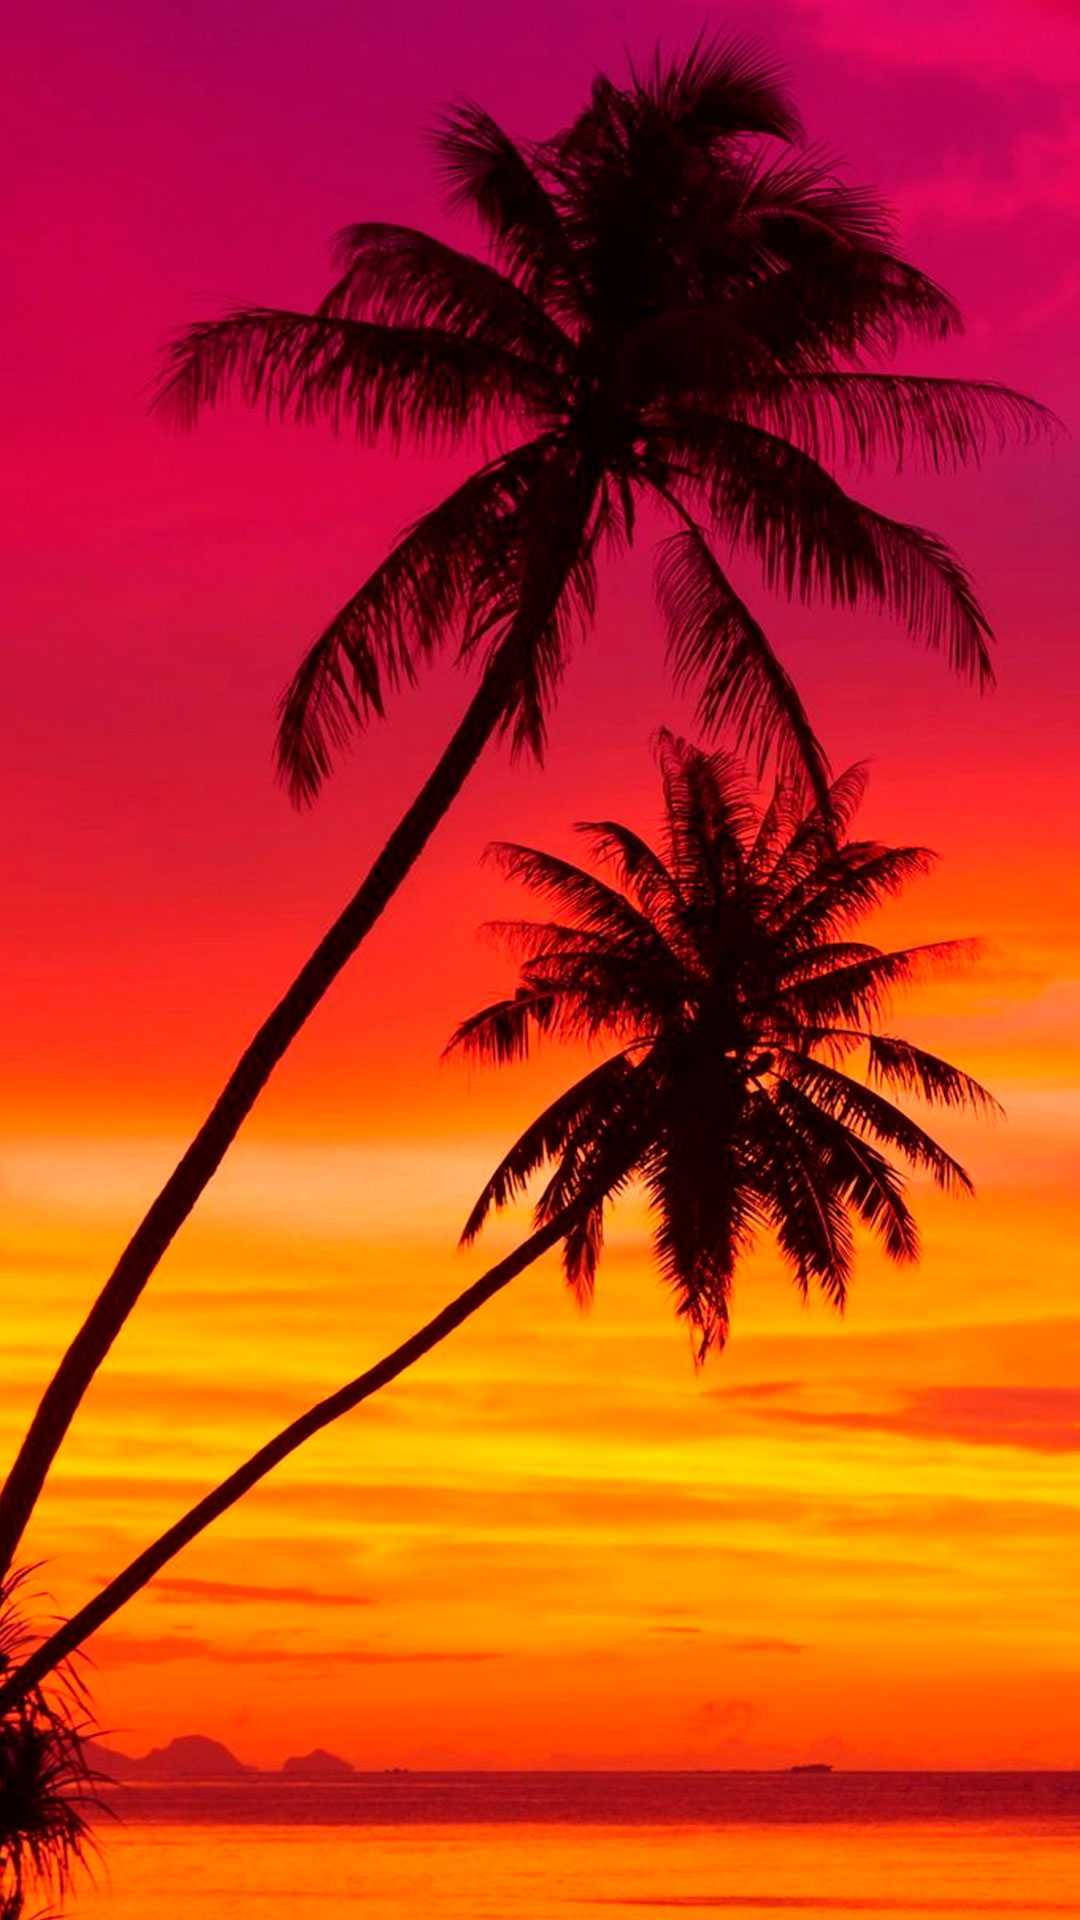 Scenic Sunset Iphone Screensaver Background